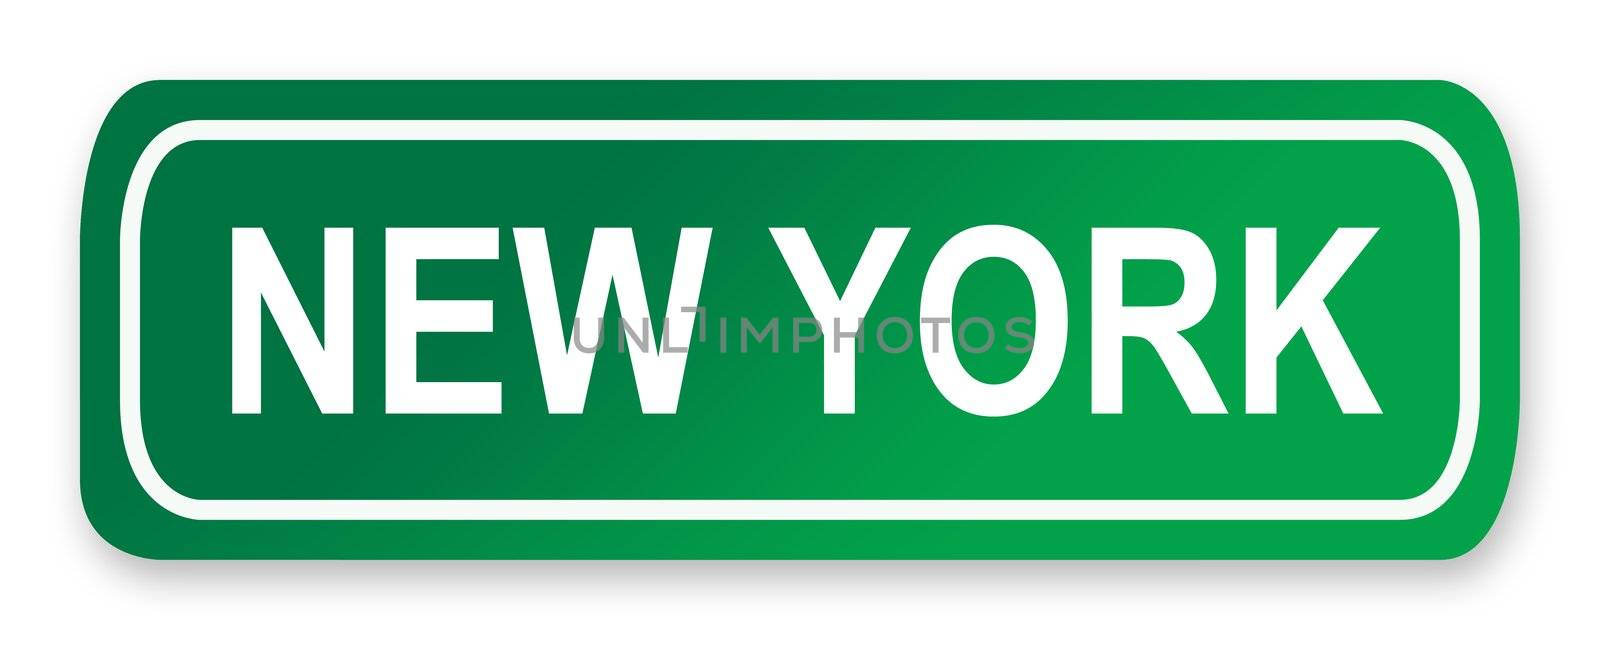 New York Street Sign by speedfighter